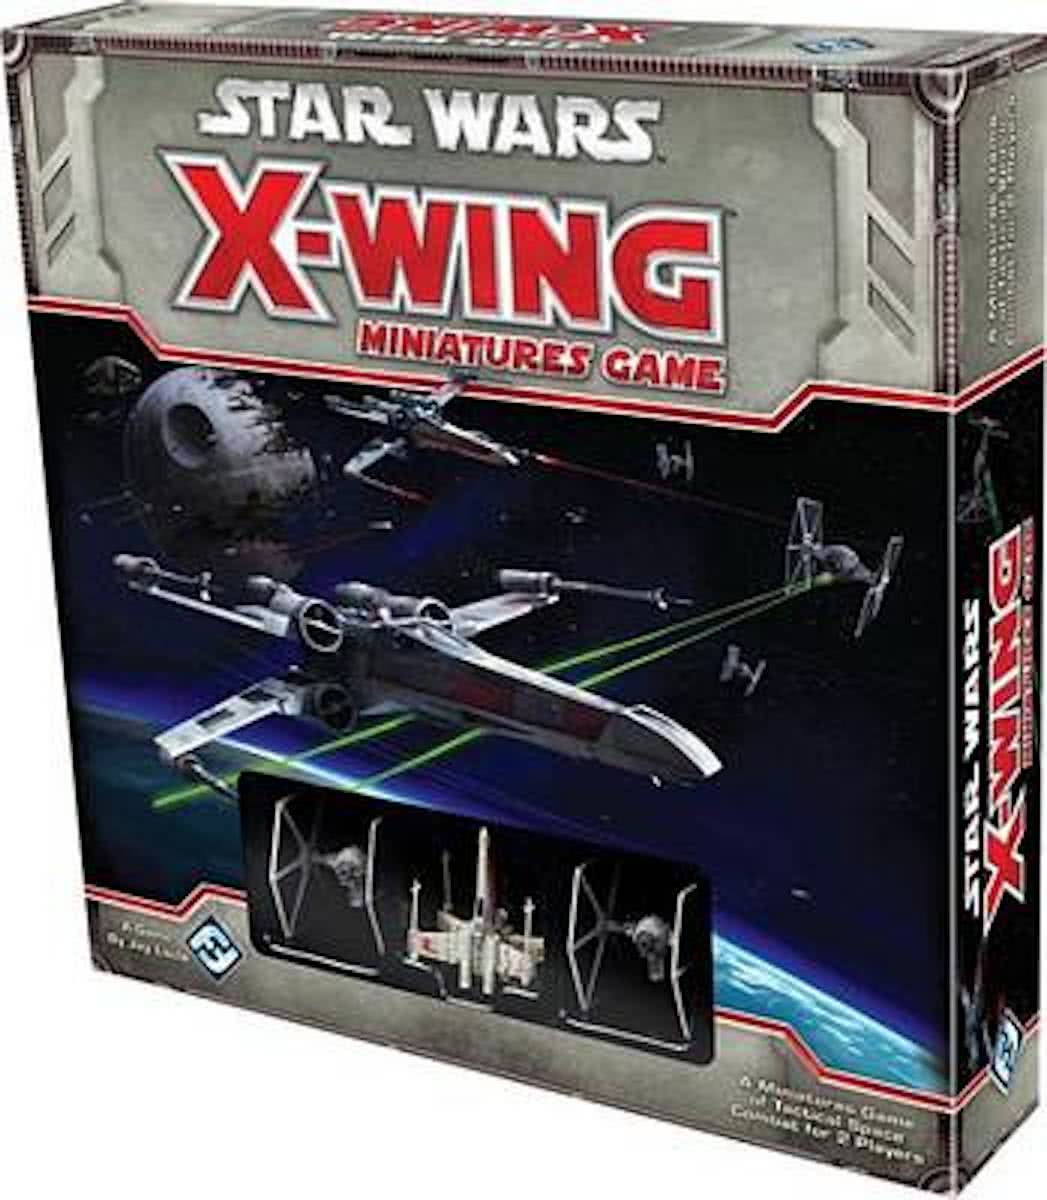 Star Wars: X-Wing Miniatures Game description reviews